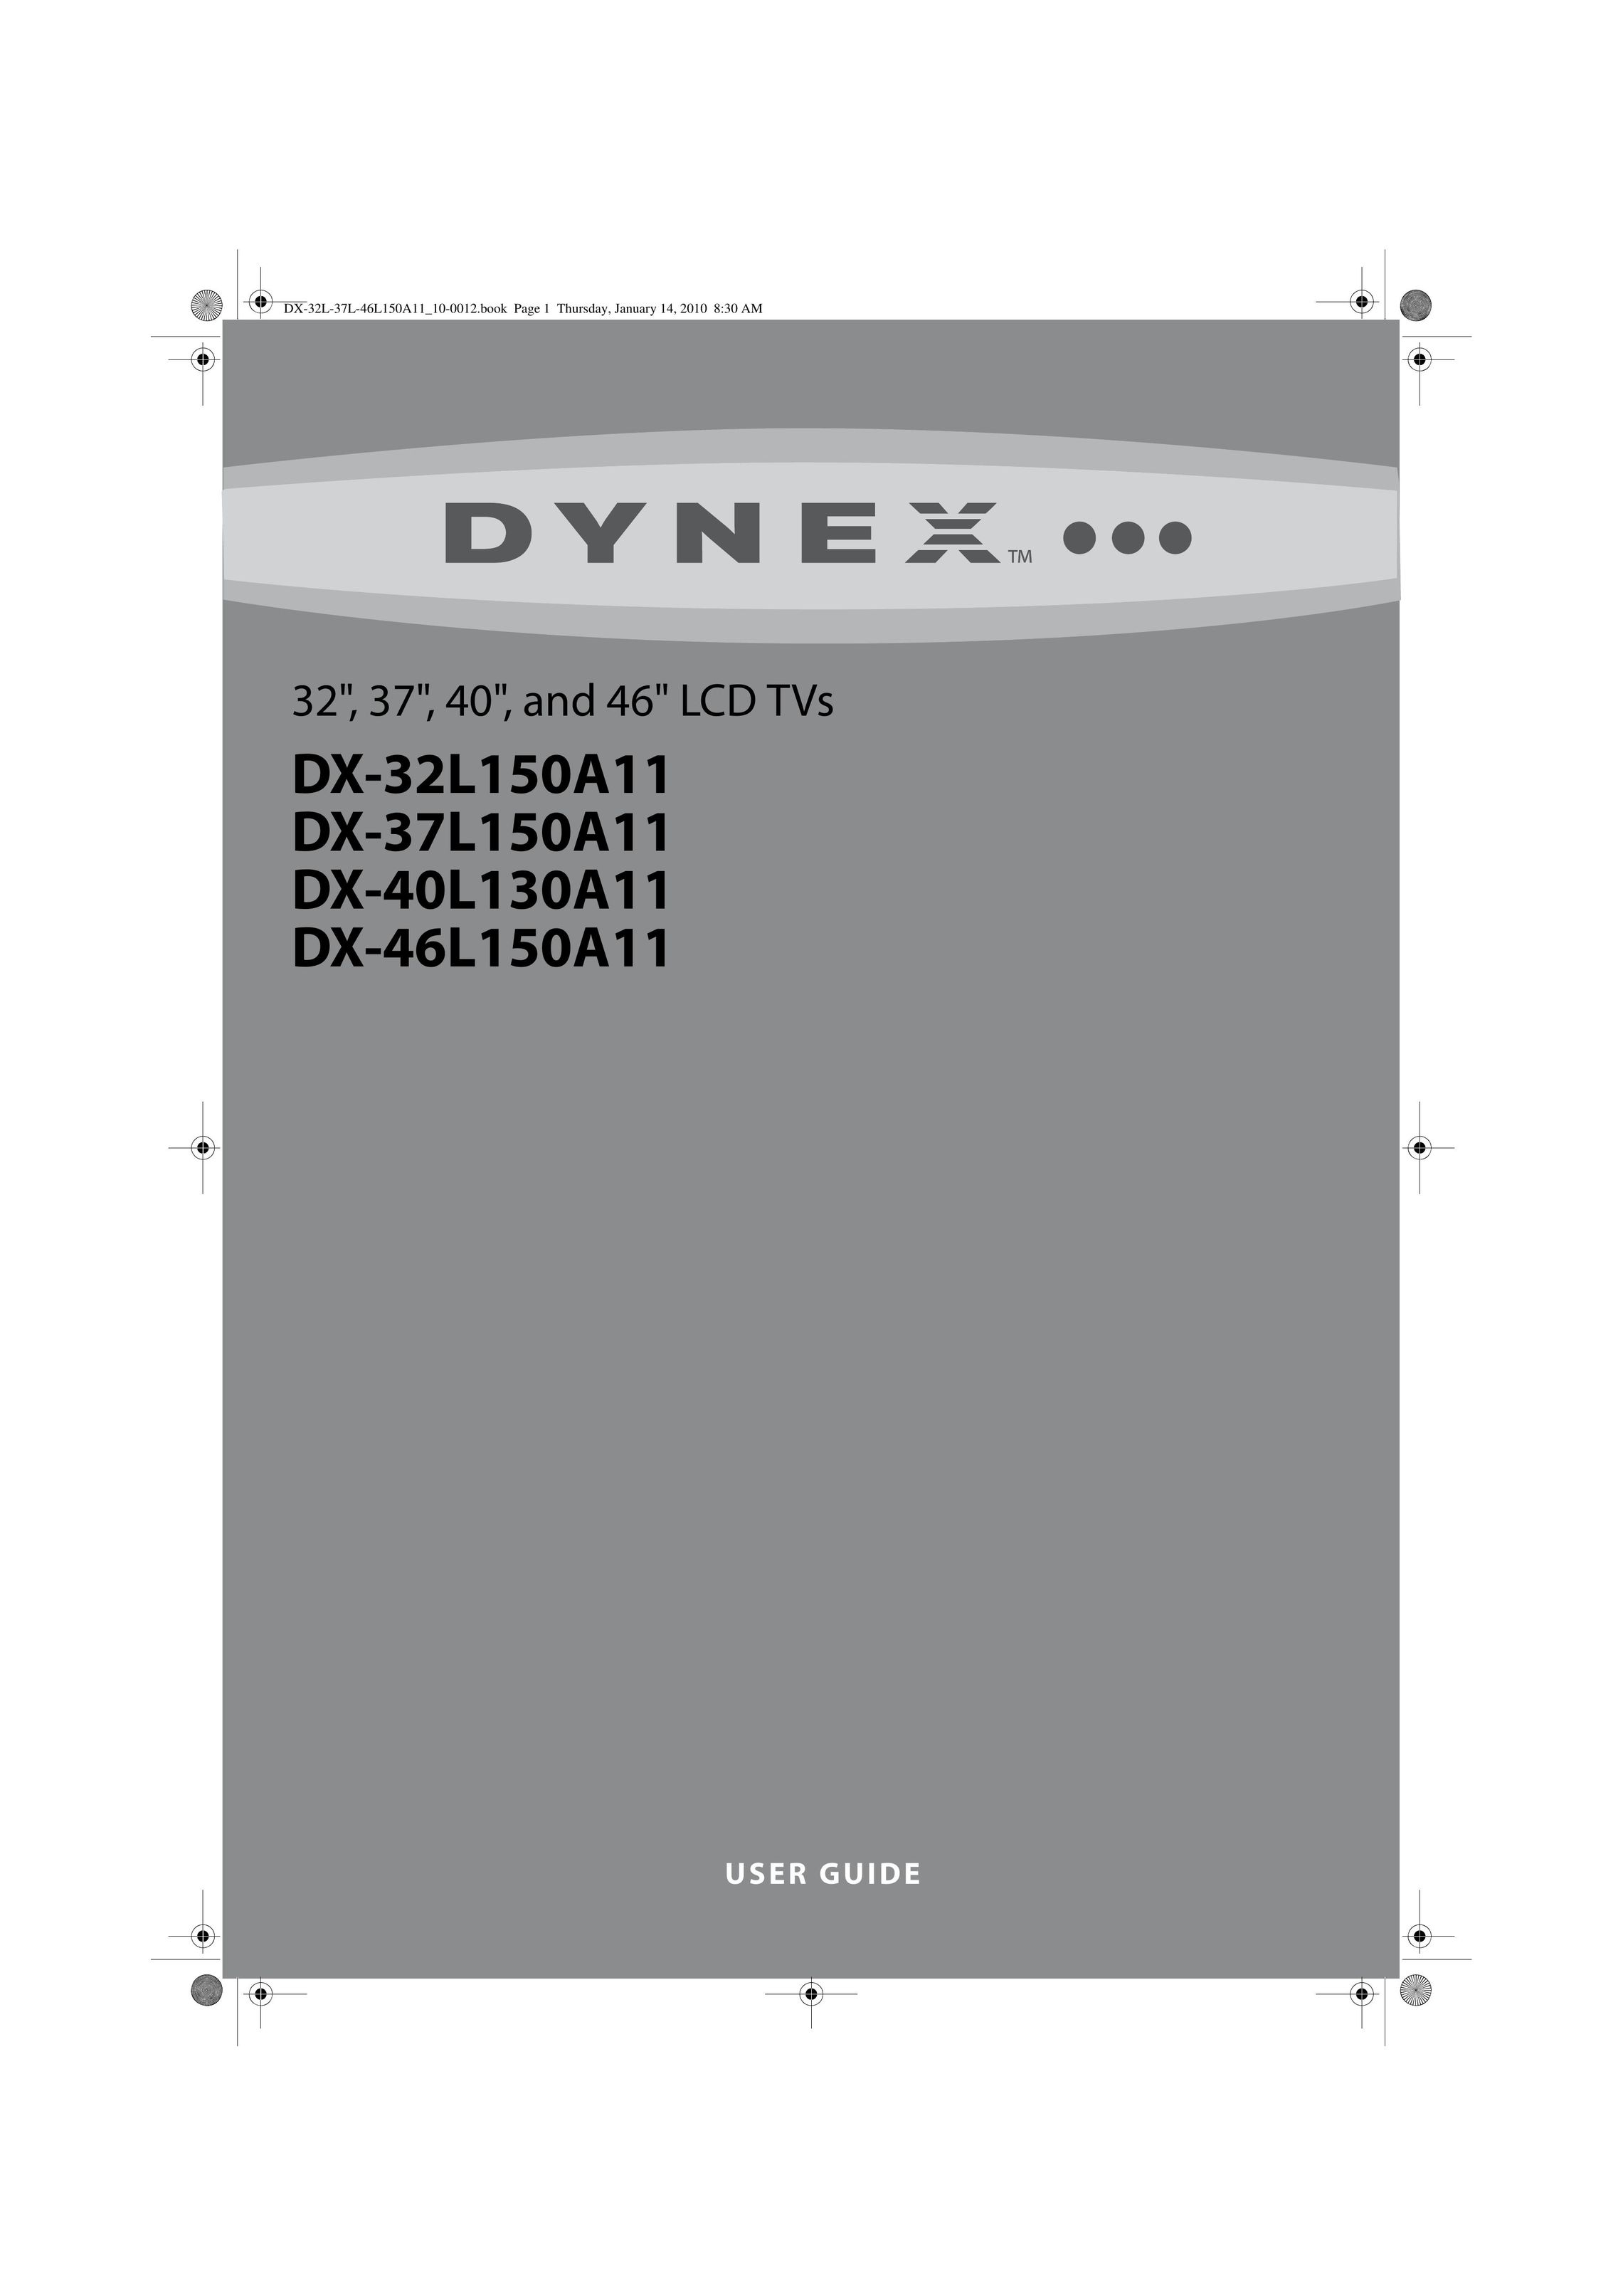 Dynex DX-37L150A11 Flat Panel Television User Manual